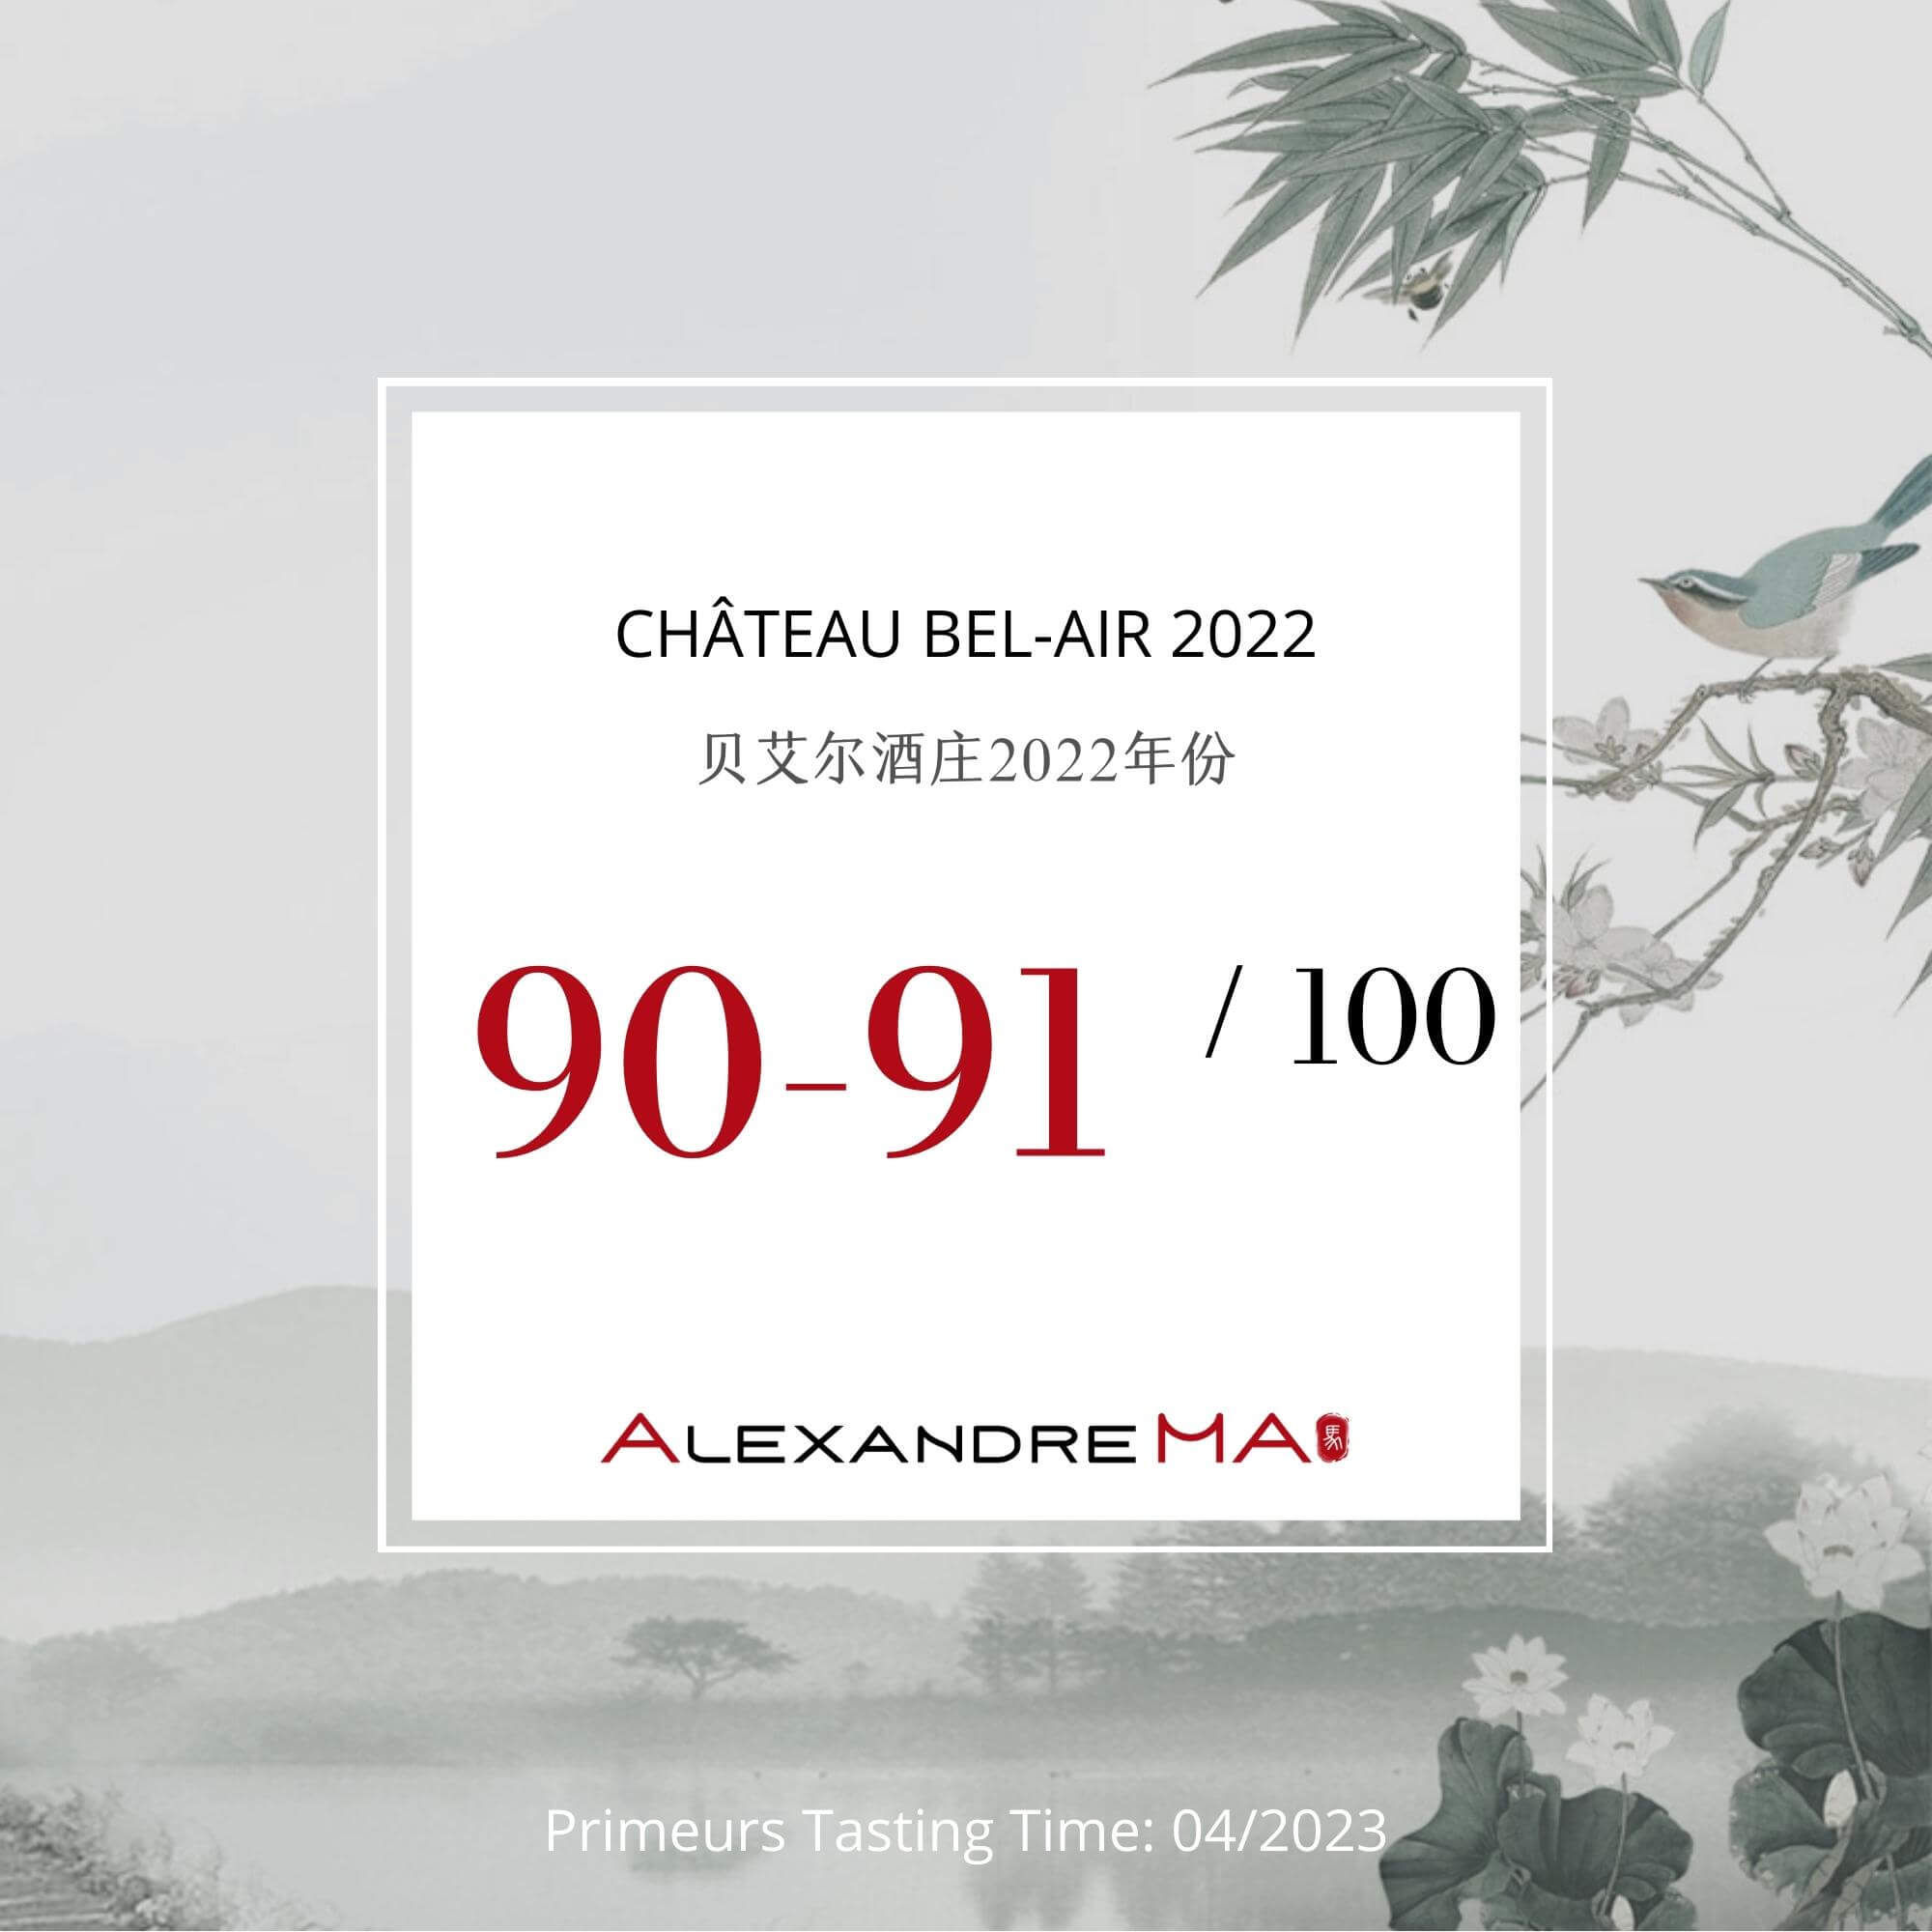 Château Bel-Air 2022 Primeurs - Alexandre MA